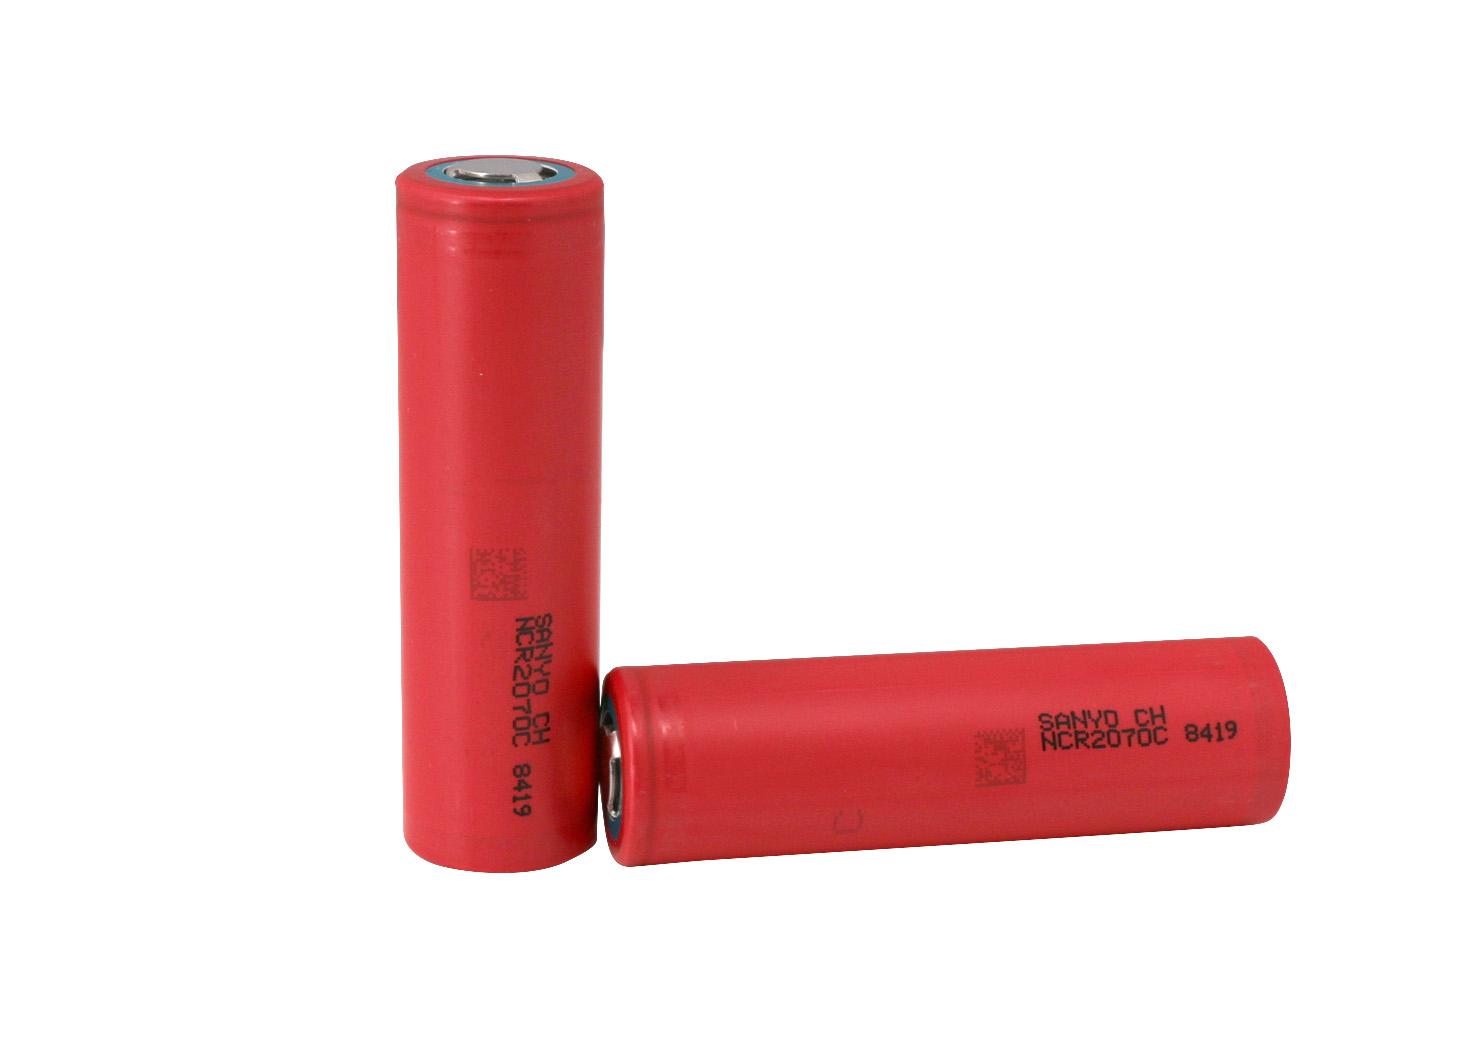 Sanyo NCR2070C 30A 3.6V 3620mAh Li-ion Rechargeable Battery